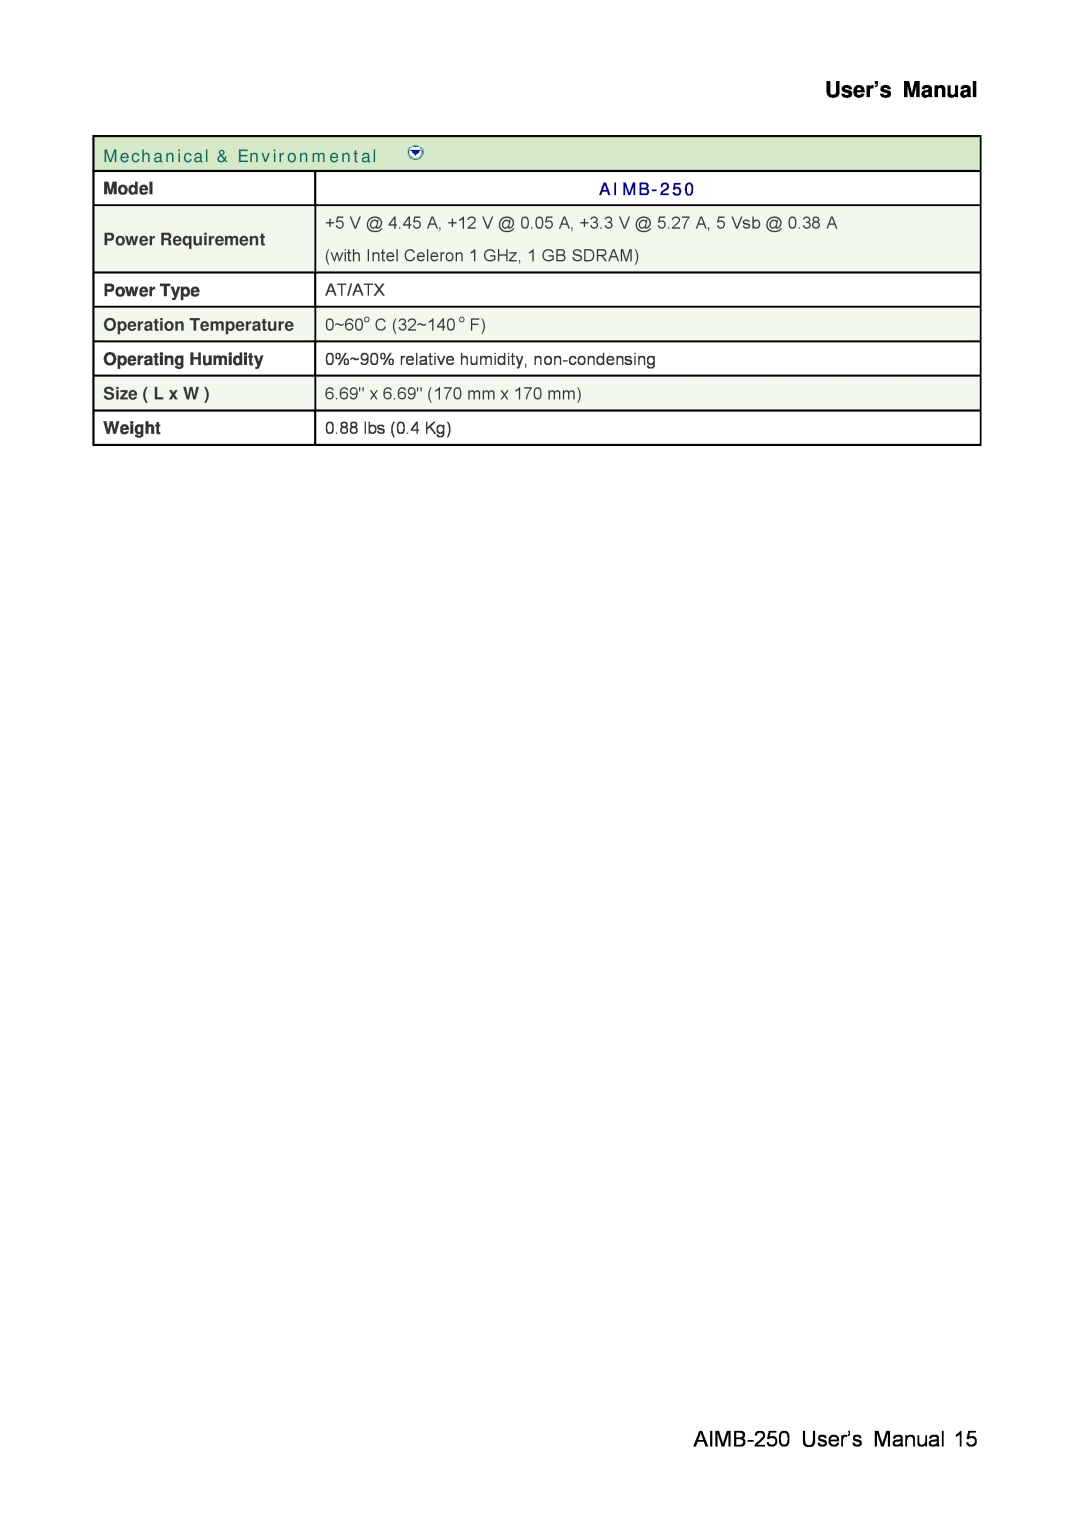 Advantech AIMB-250 User’s Manual, Mechanical & Environmental, with Intel Celeron 1 GHz, 1 GB SDRAM, At/Atx, lbs 0.4 Kg 